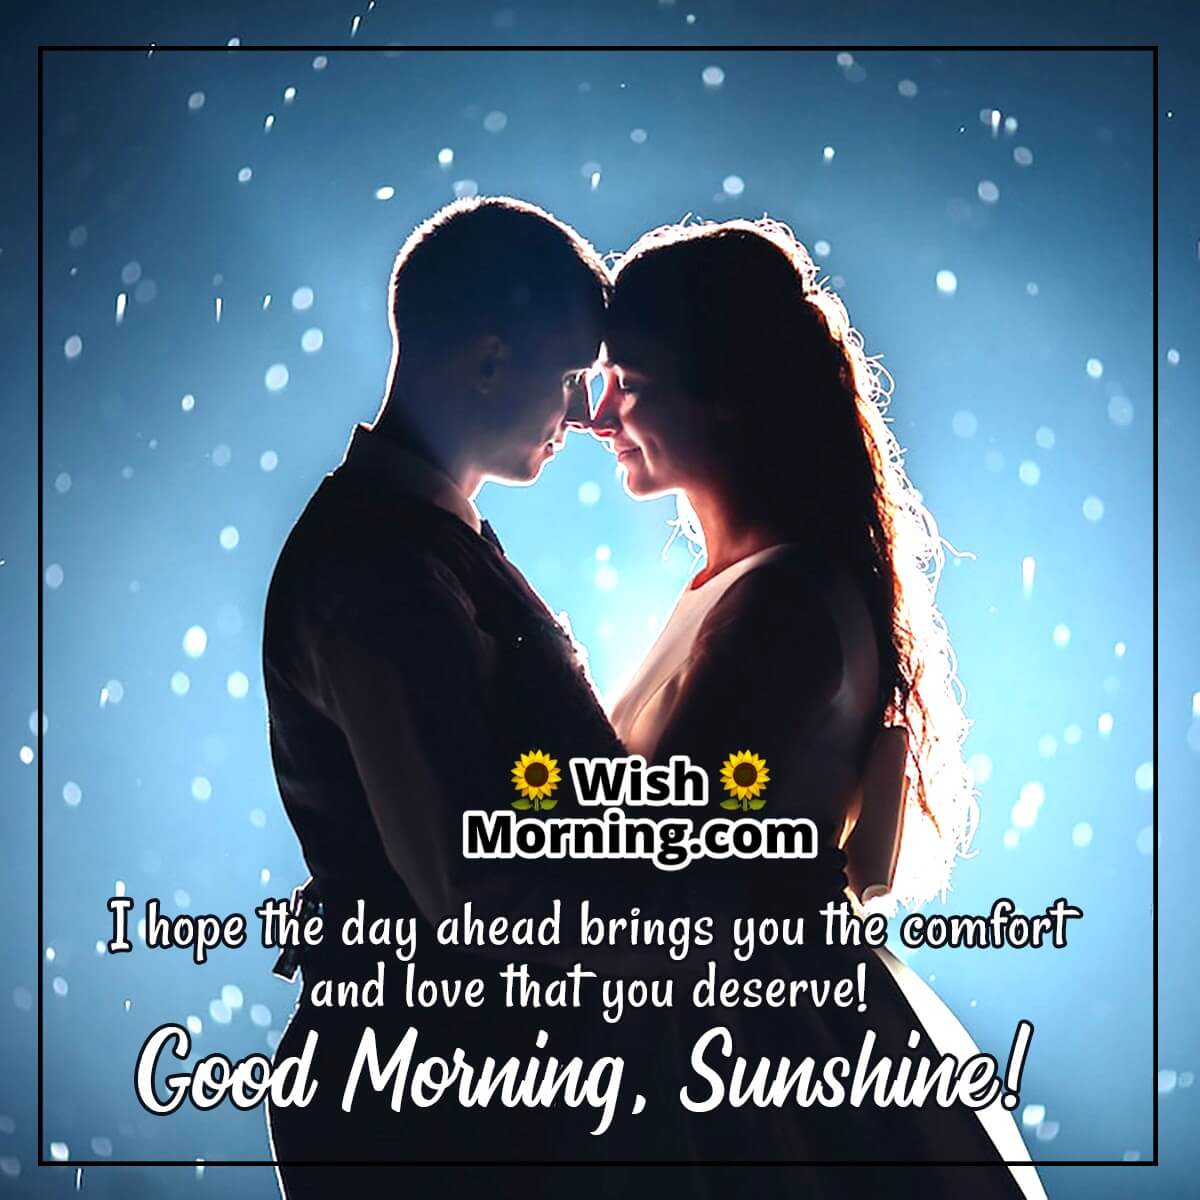 Romantic Good Morning Images - Wish Morning